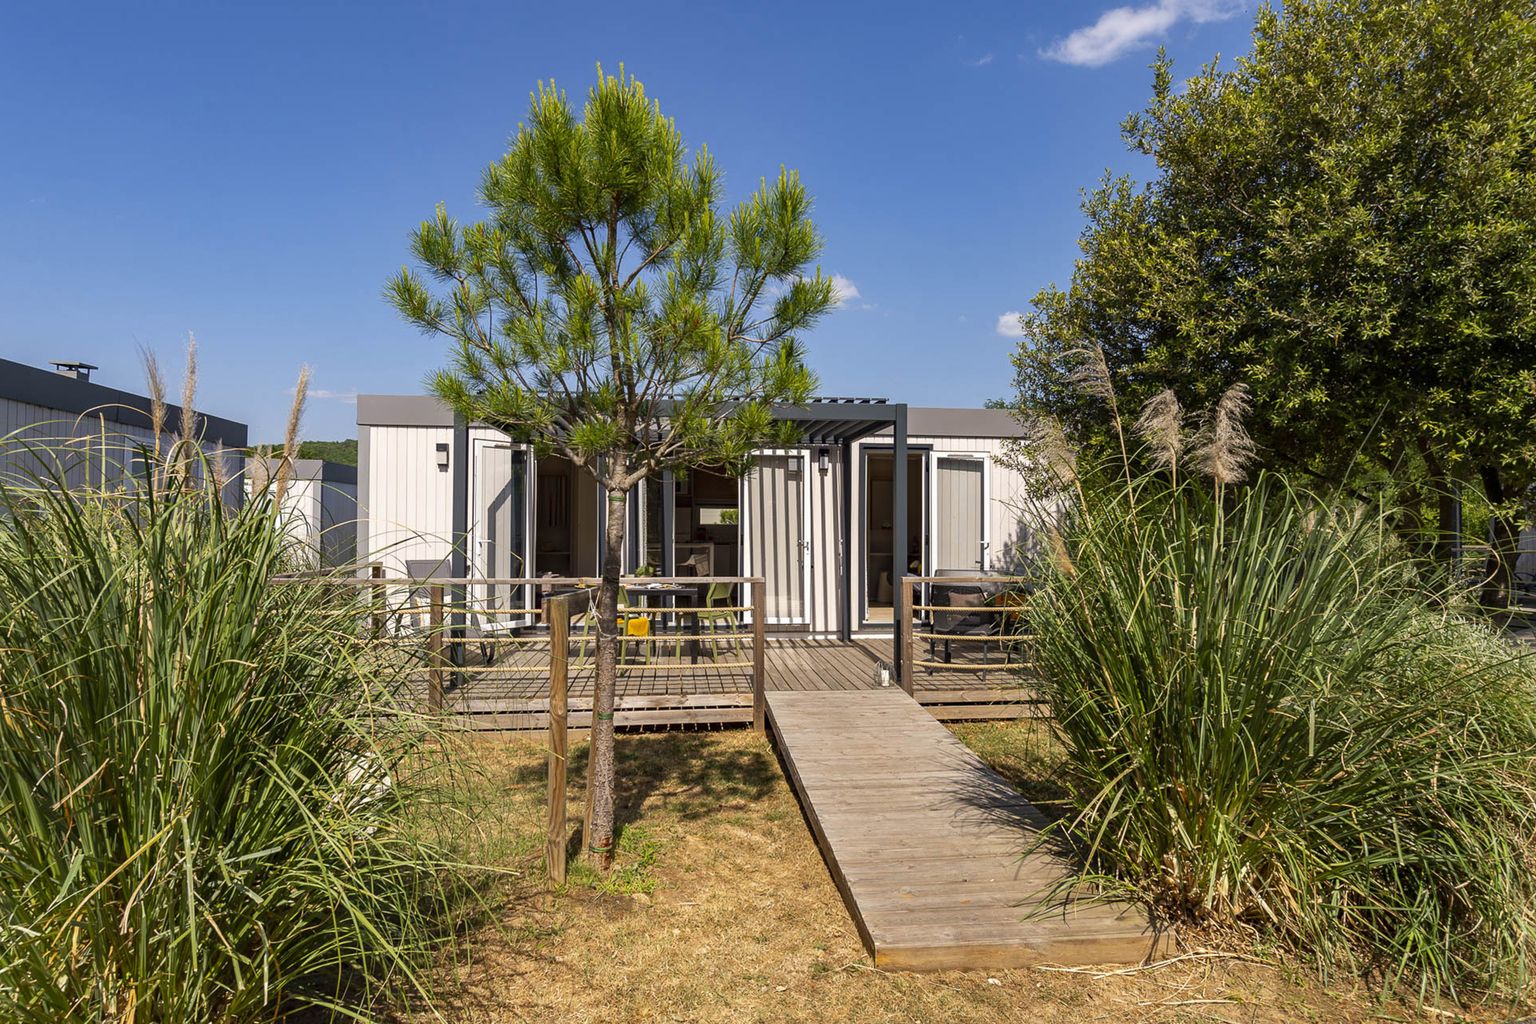 Huuraccommodatie - Cottage Arizona 2 Slaapkamers Premium - Camping Sandaya Soleil Vivarais